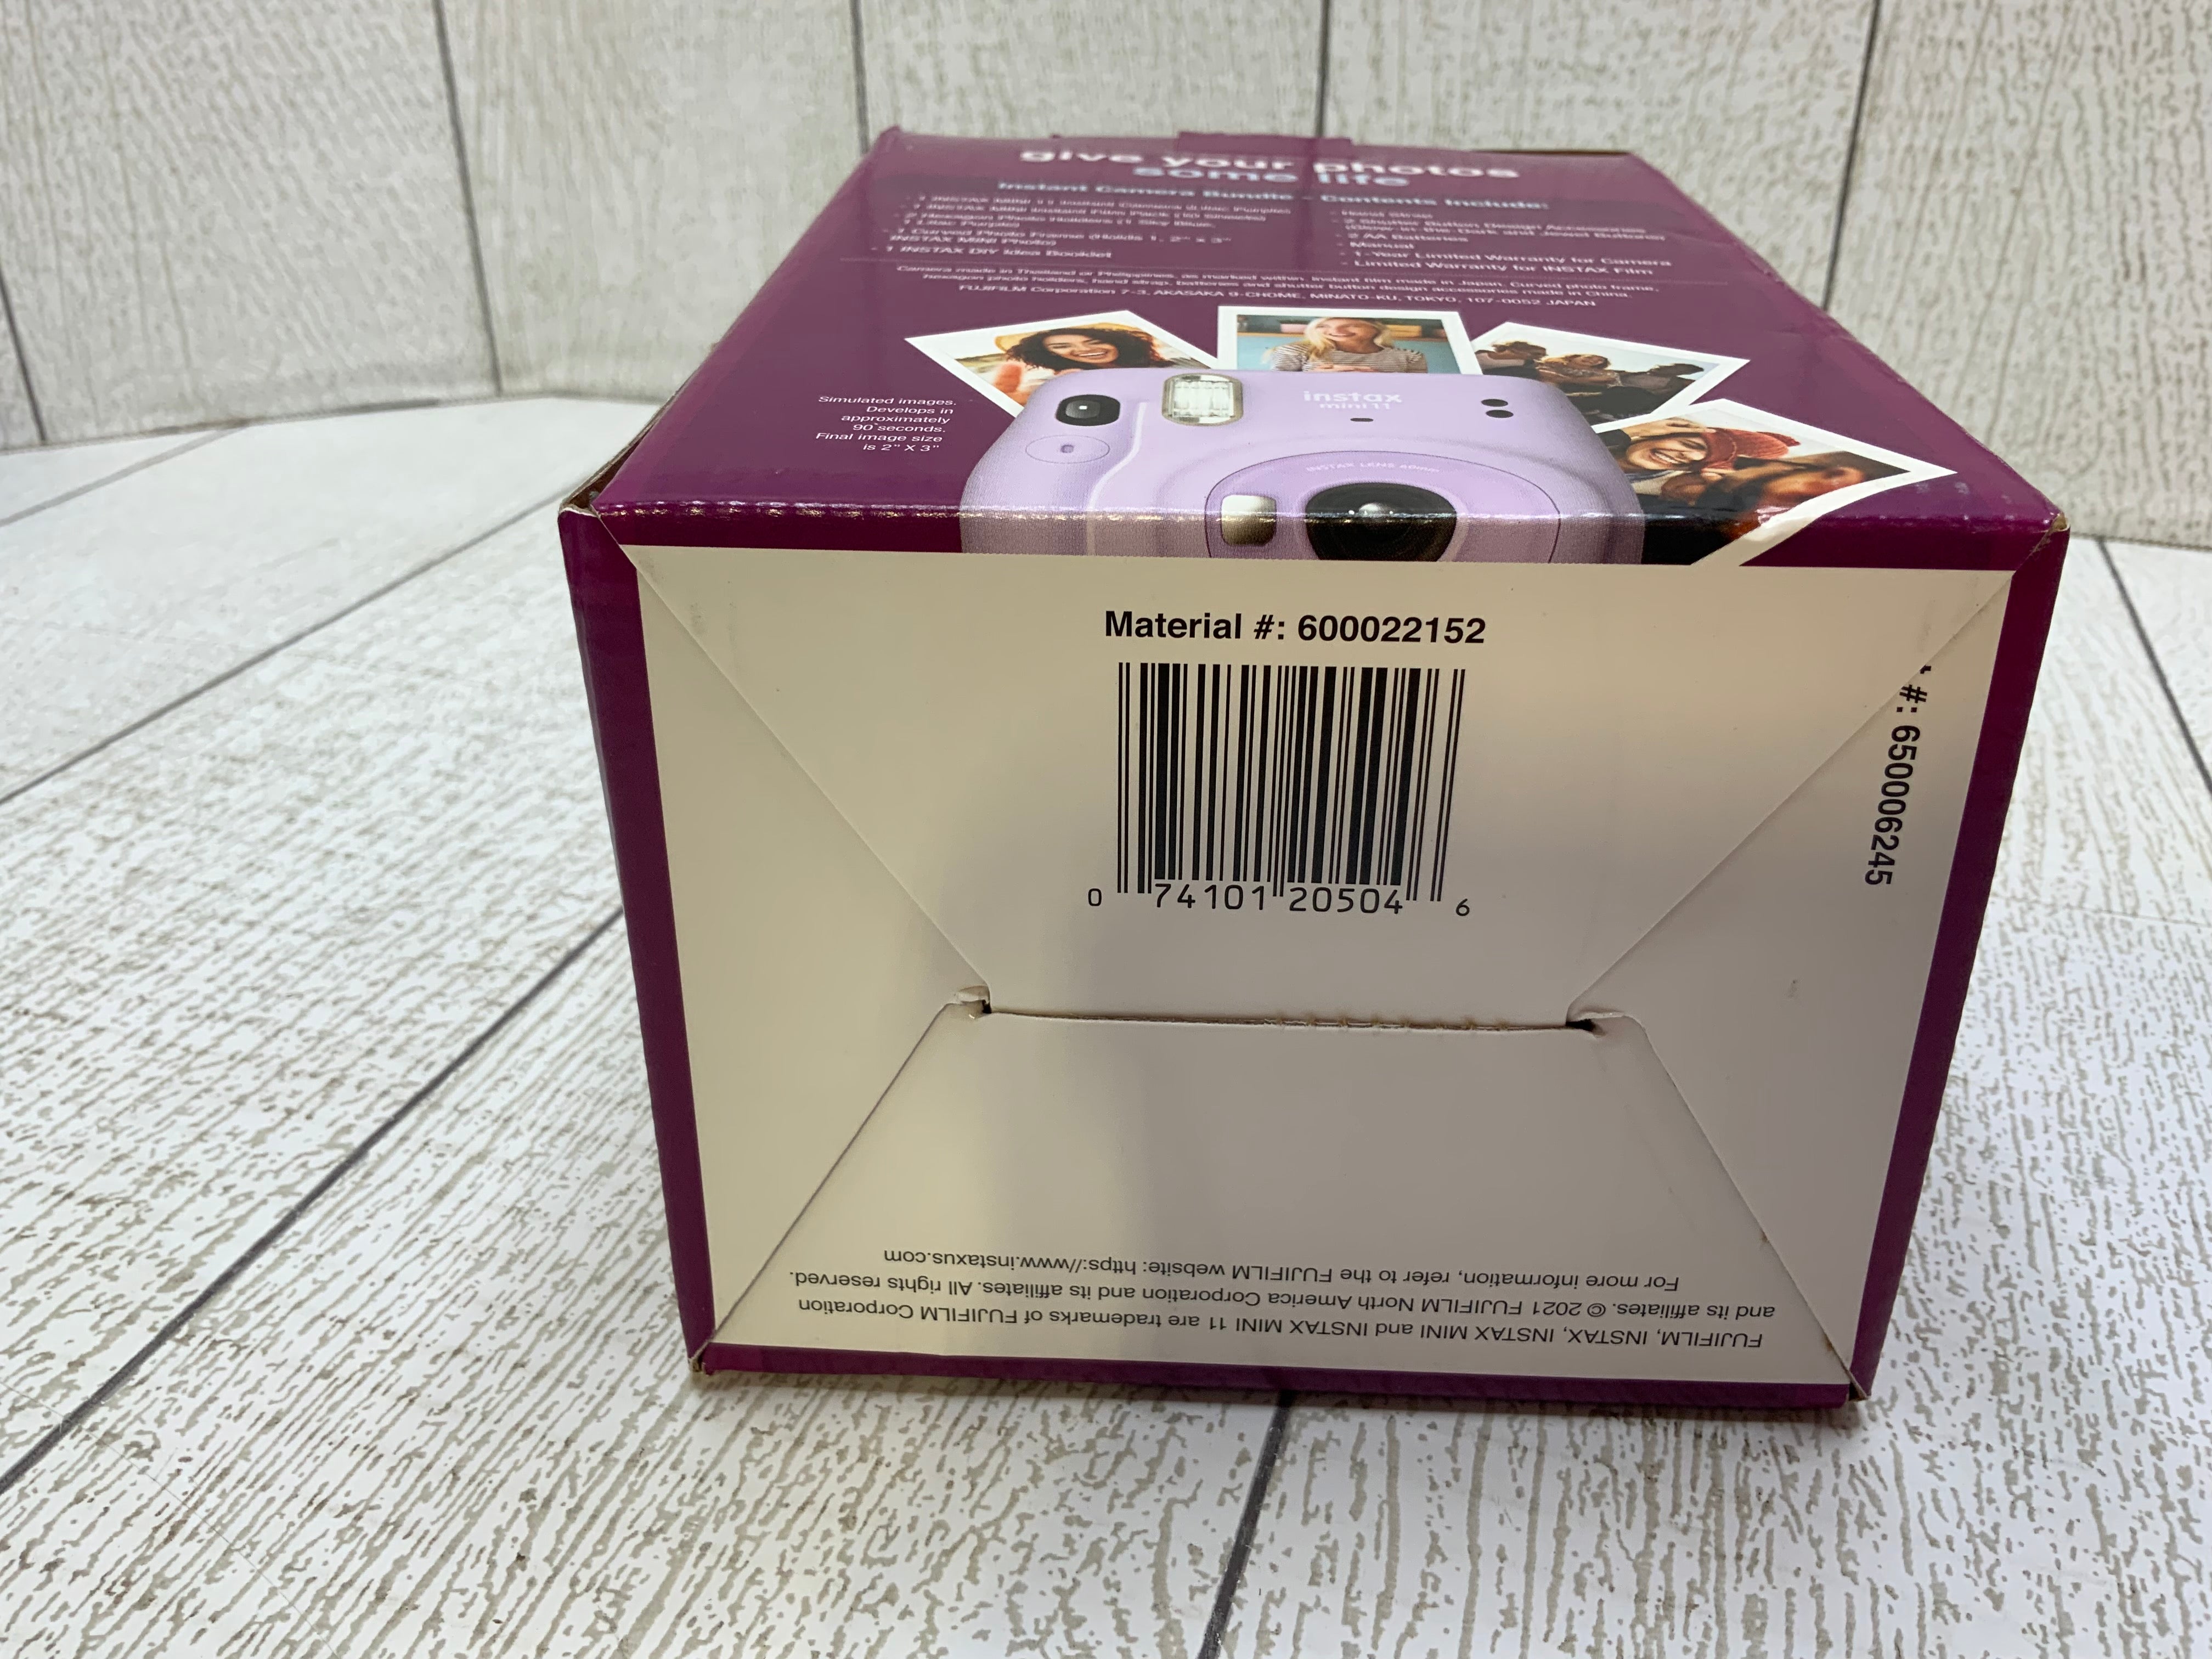 Fujifilm Instax Mini 11 2021 Bundle - Purple (7949049725166)